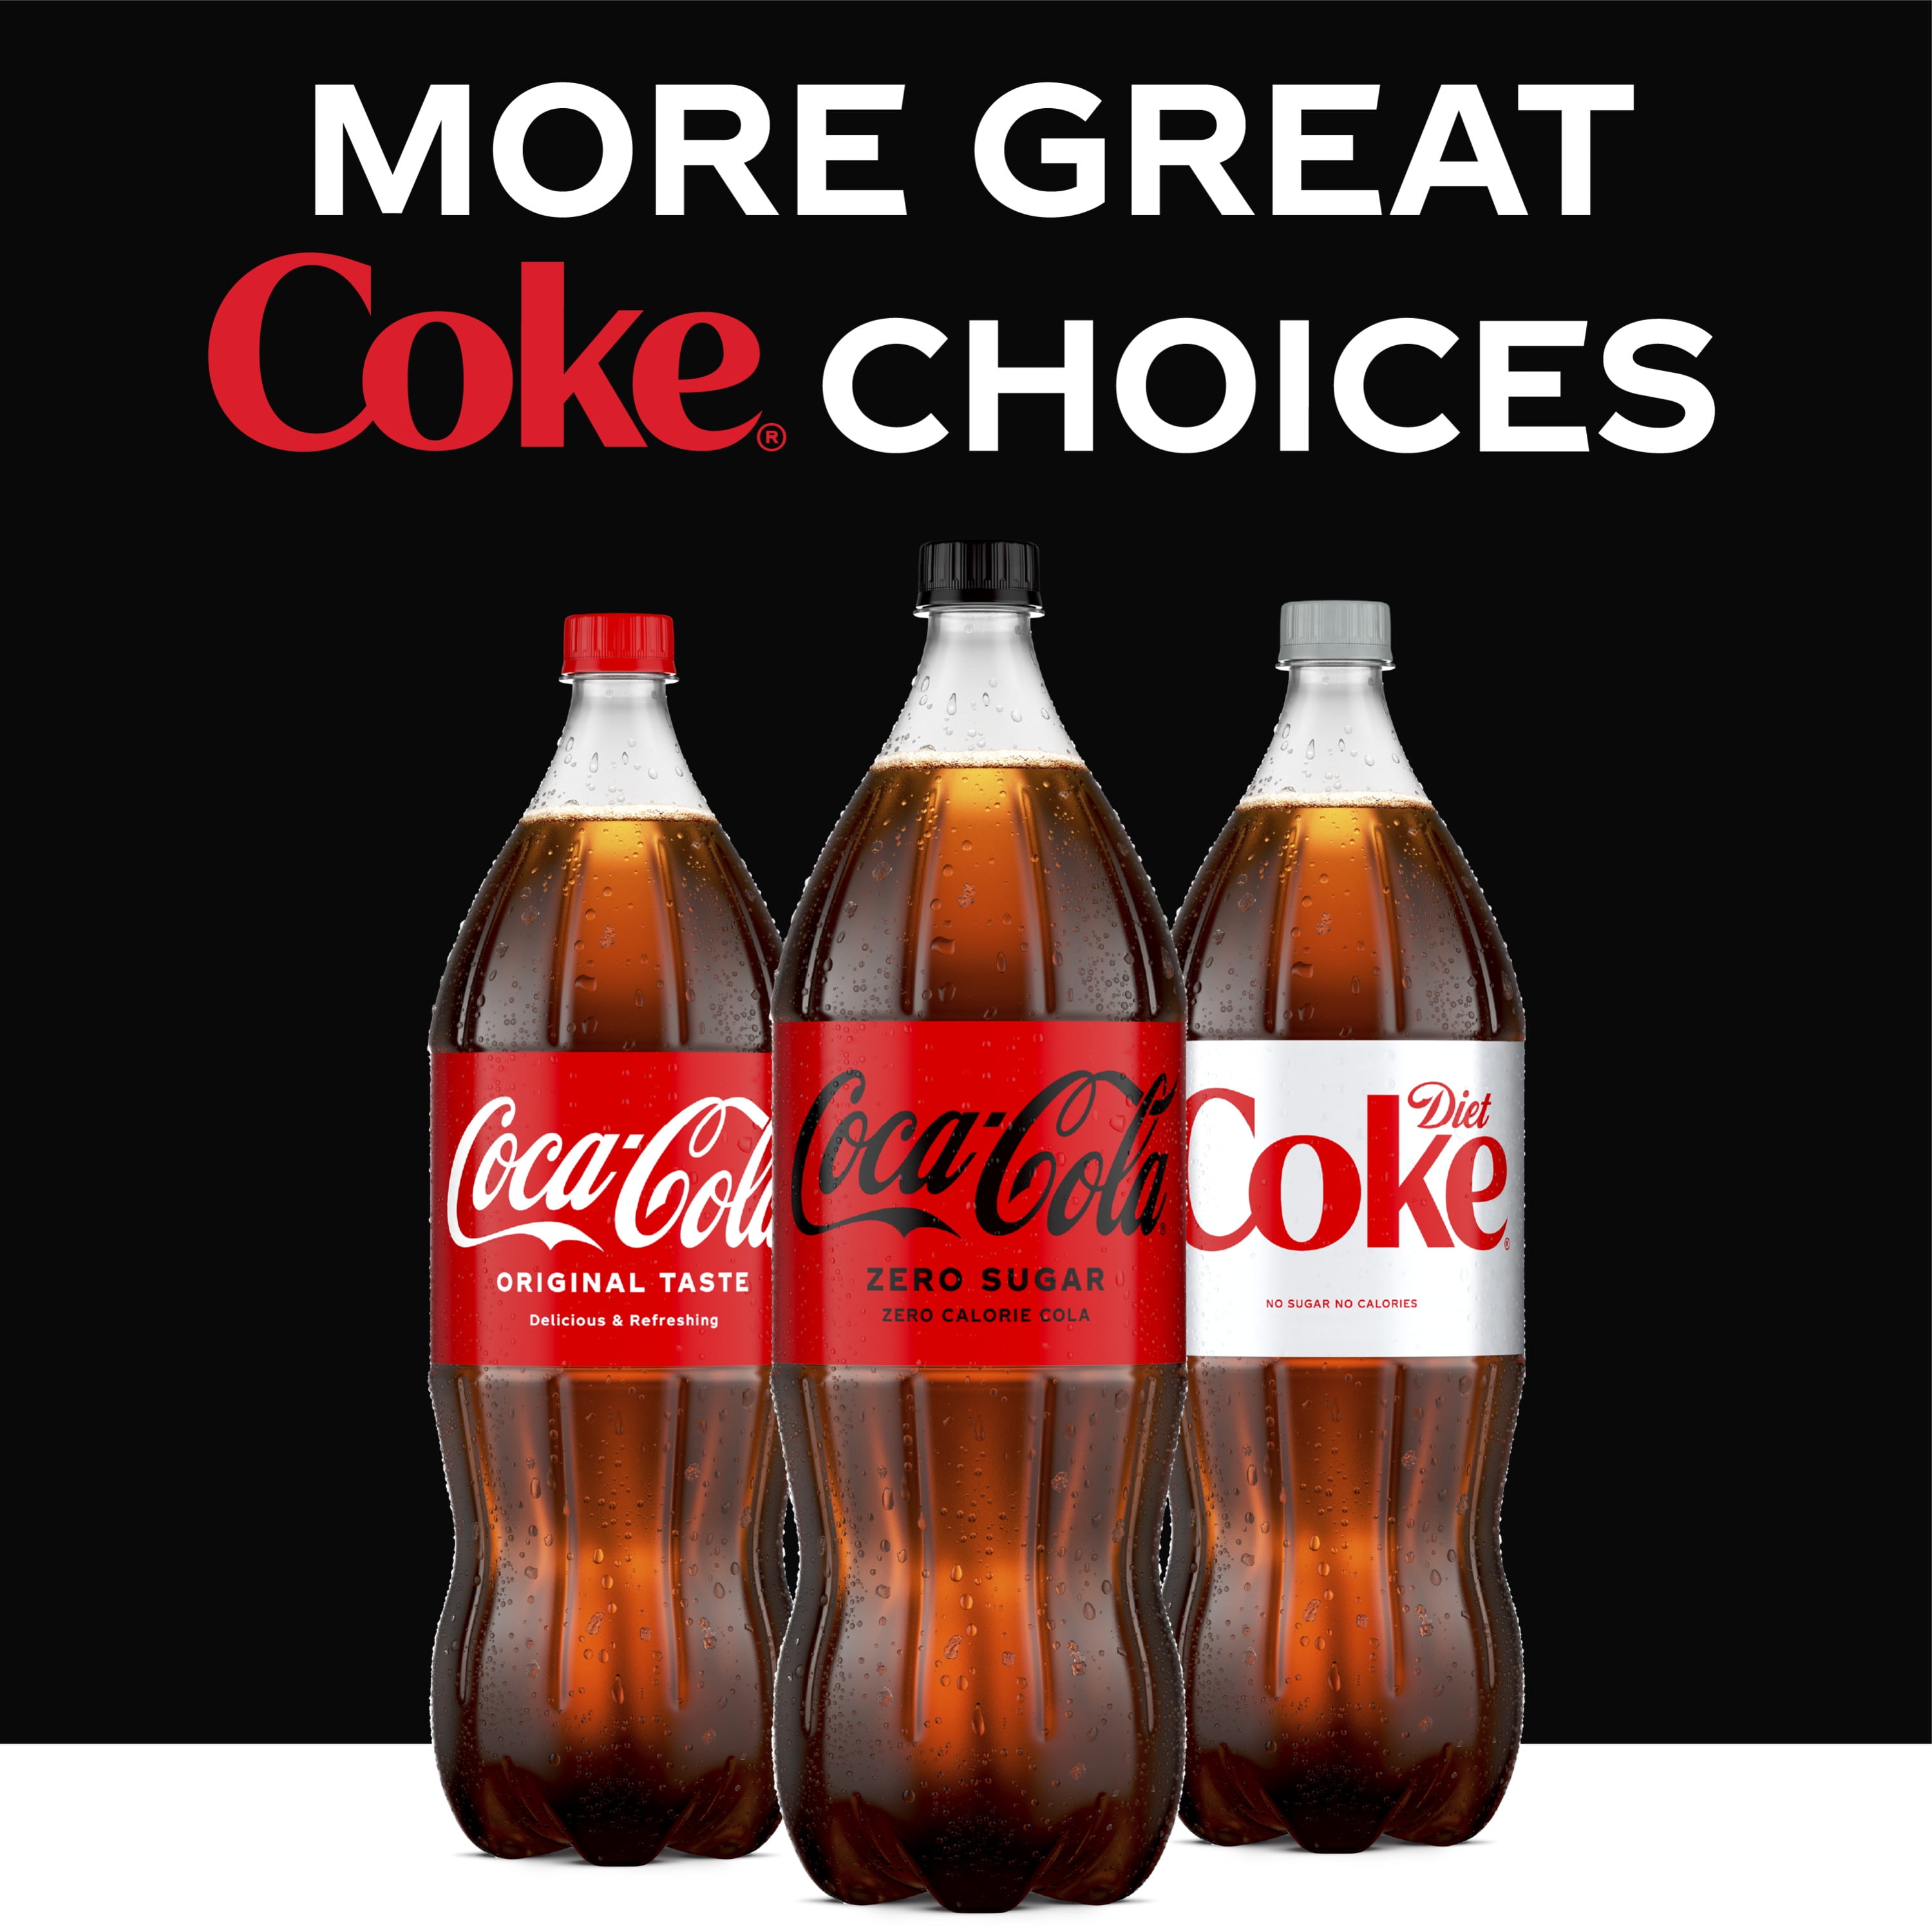 Pepsi Max Soda Cola Zero Calorie - 2 Liter - Pavilions